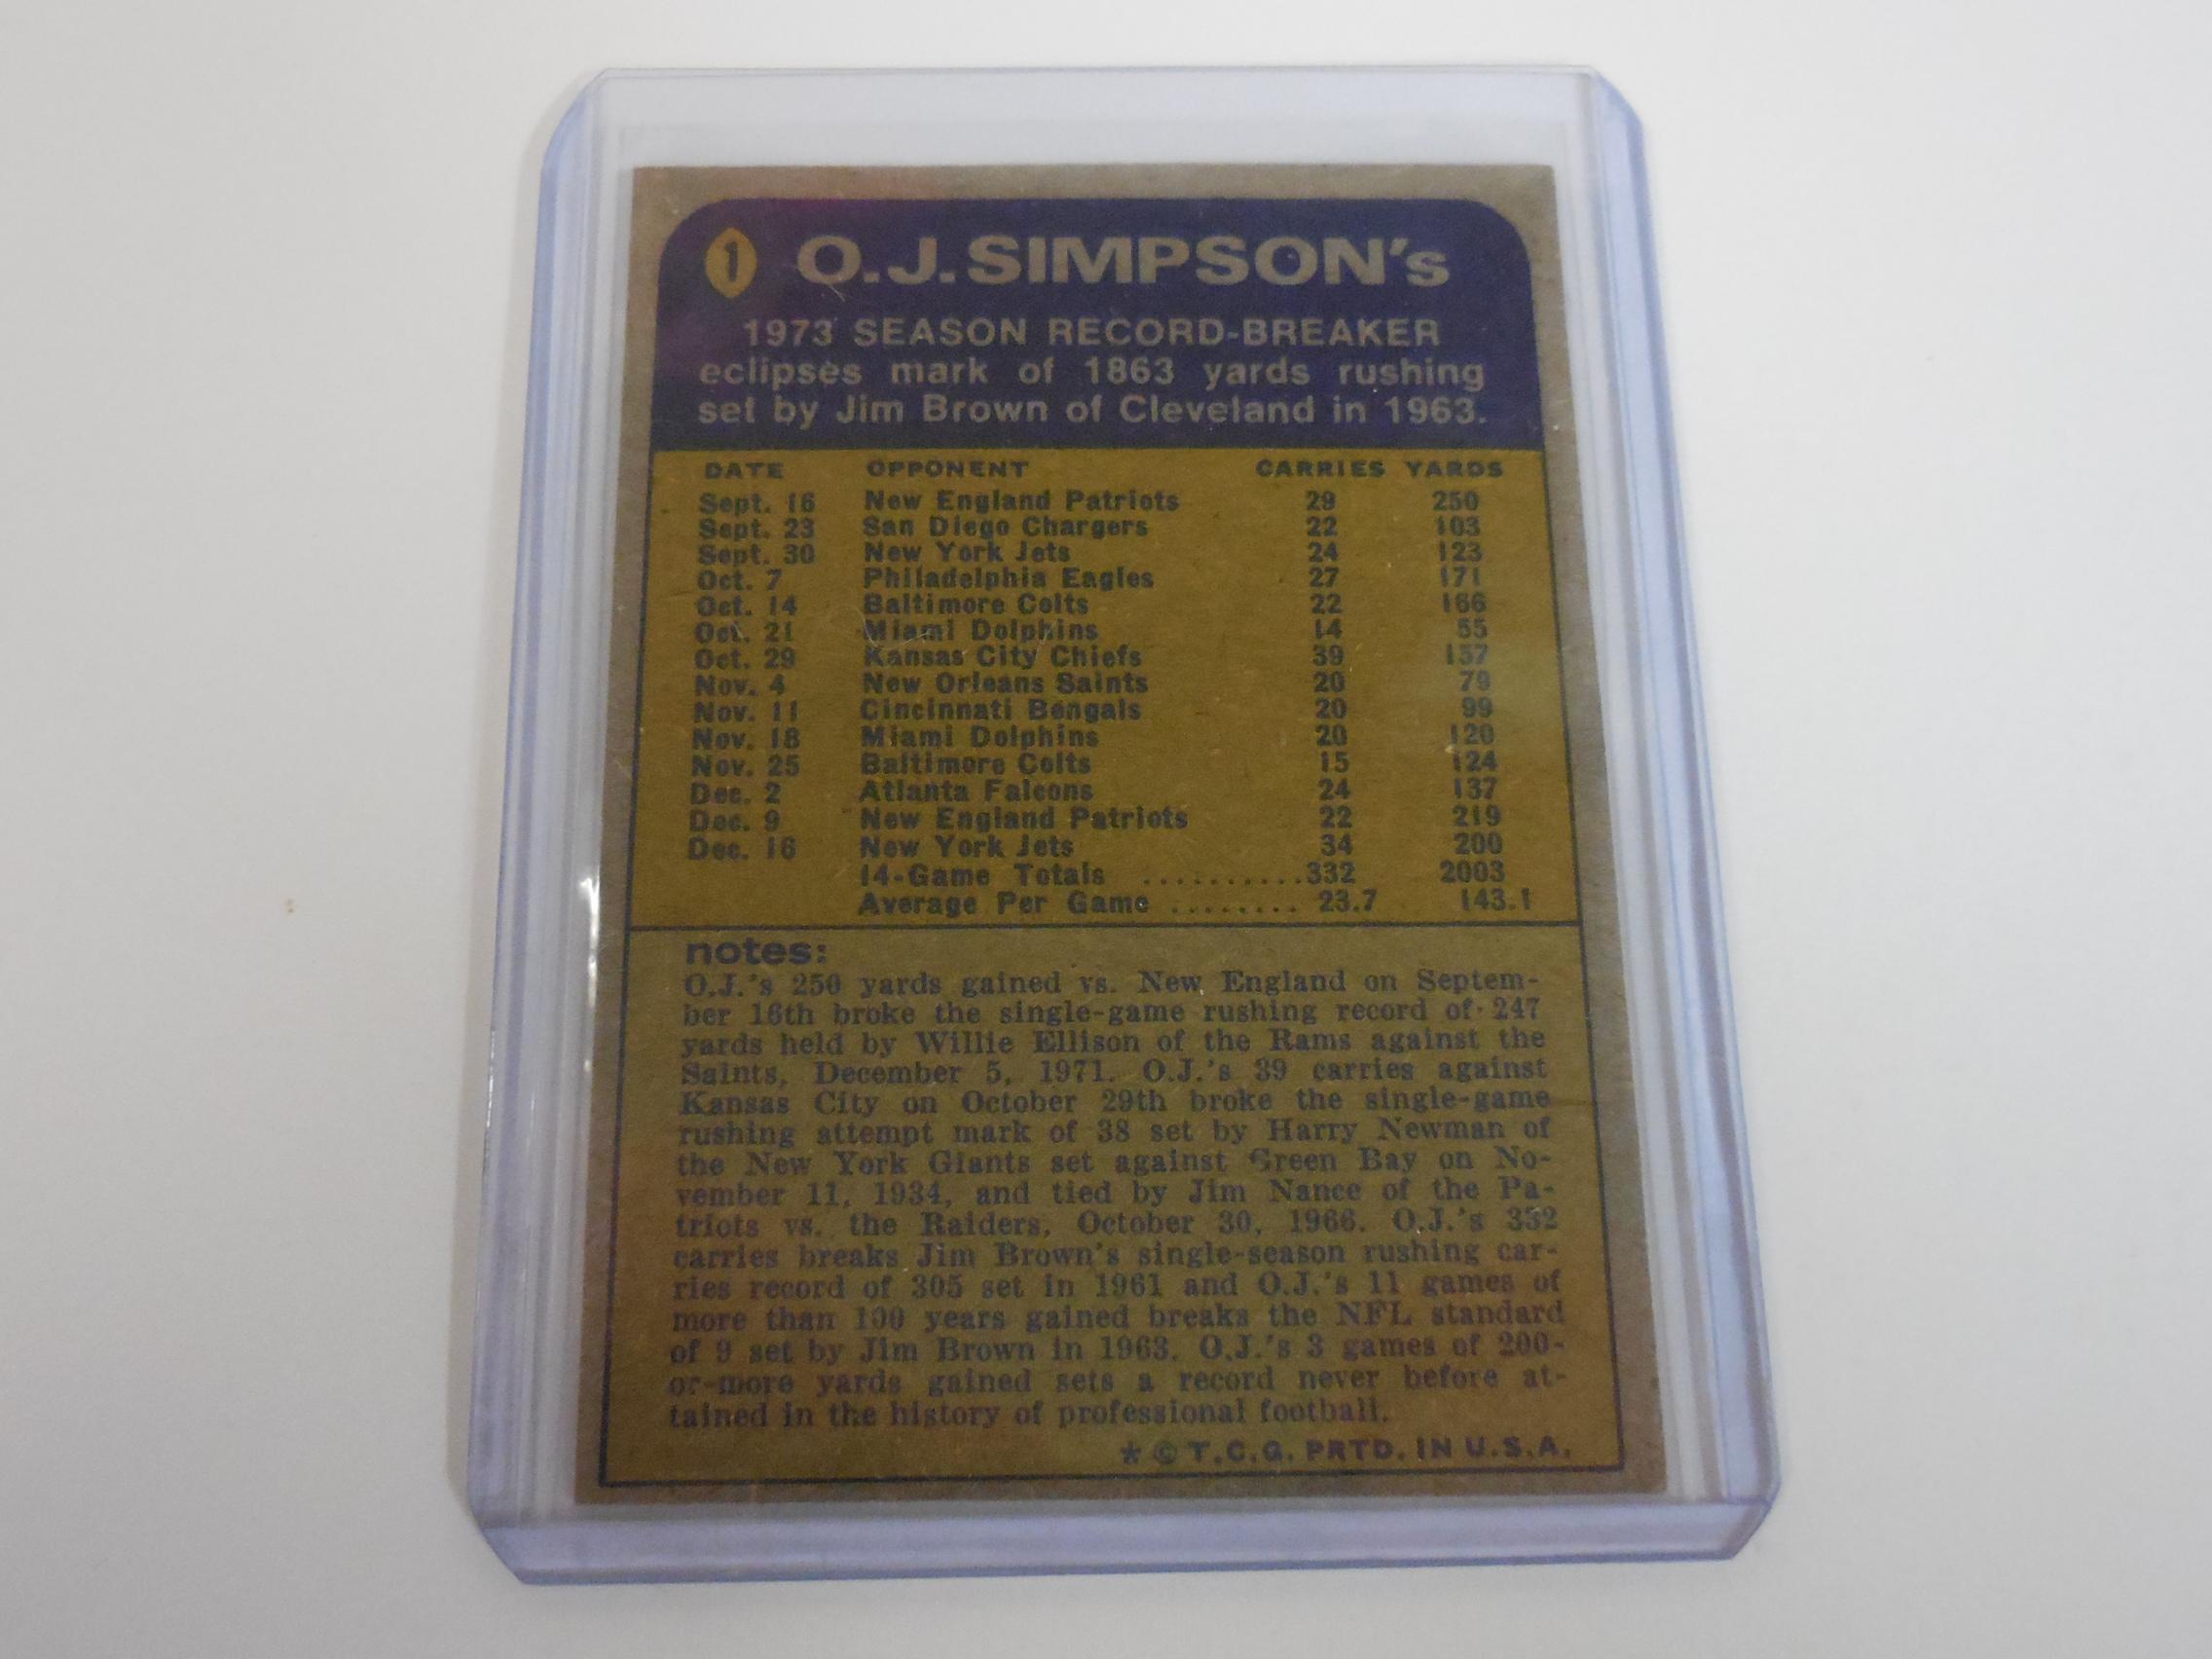 1974 TOPPS FOOTBALL #1 O.J. SIMPSON ALL TIME SINGLE SEASON RUSHING LEADER